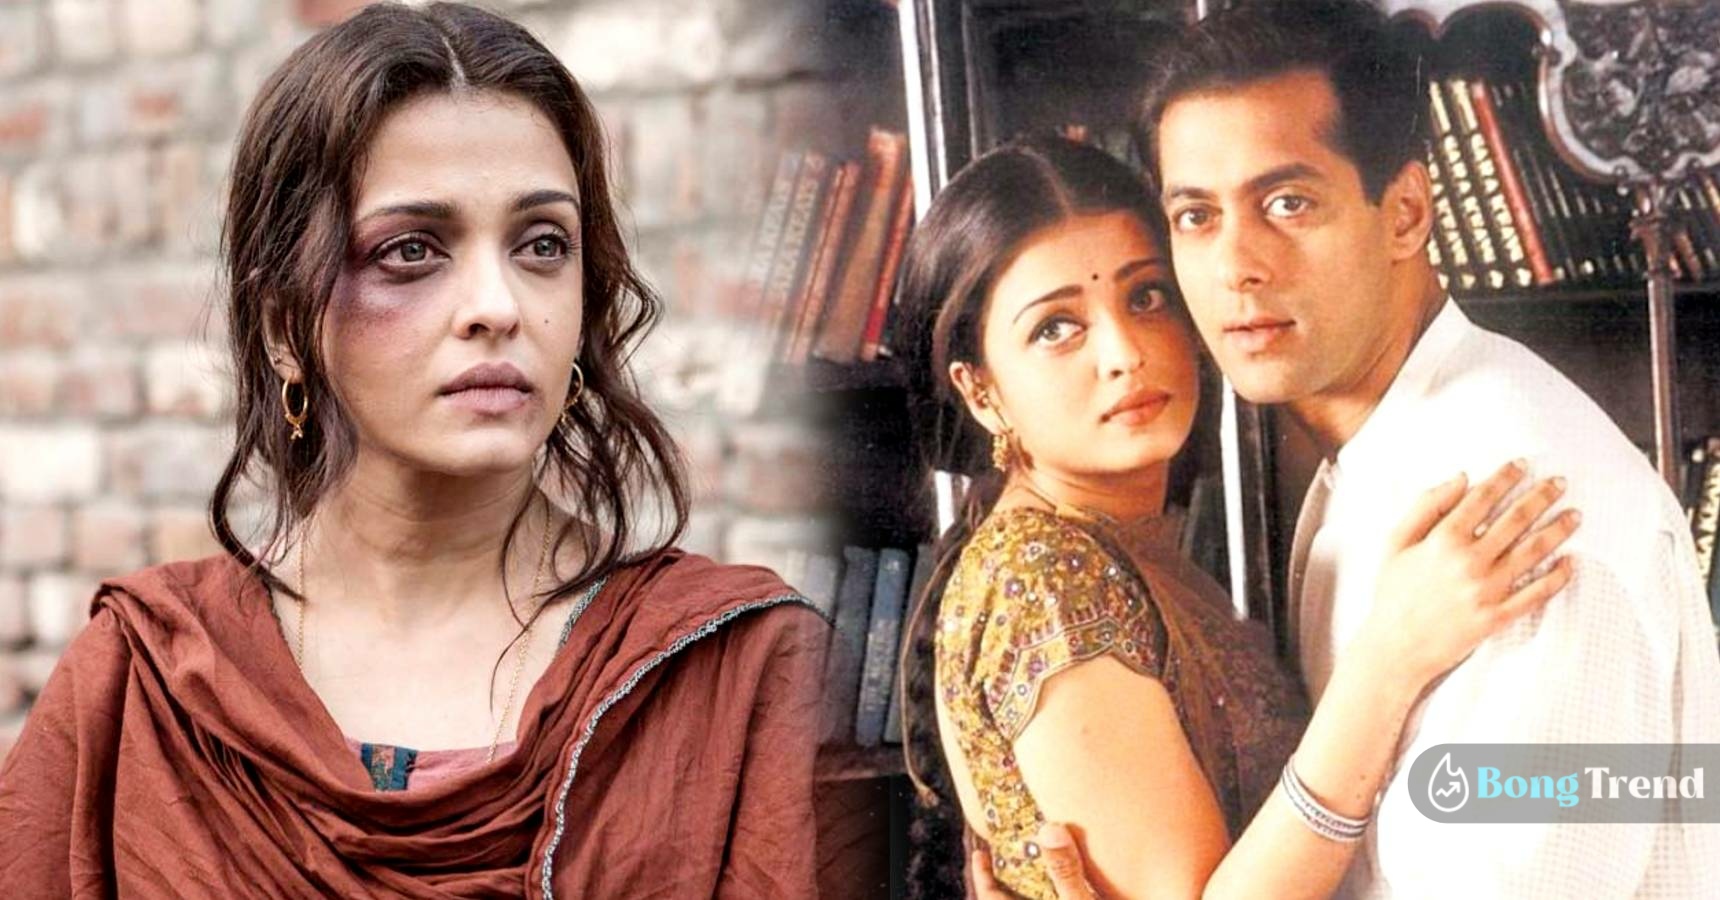 Aishwarya Rai and Salman Khan’s controversial relationship